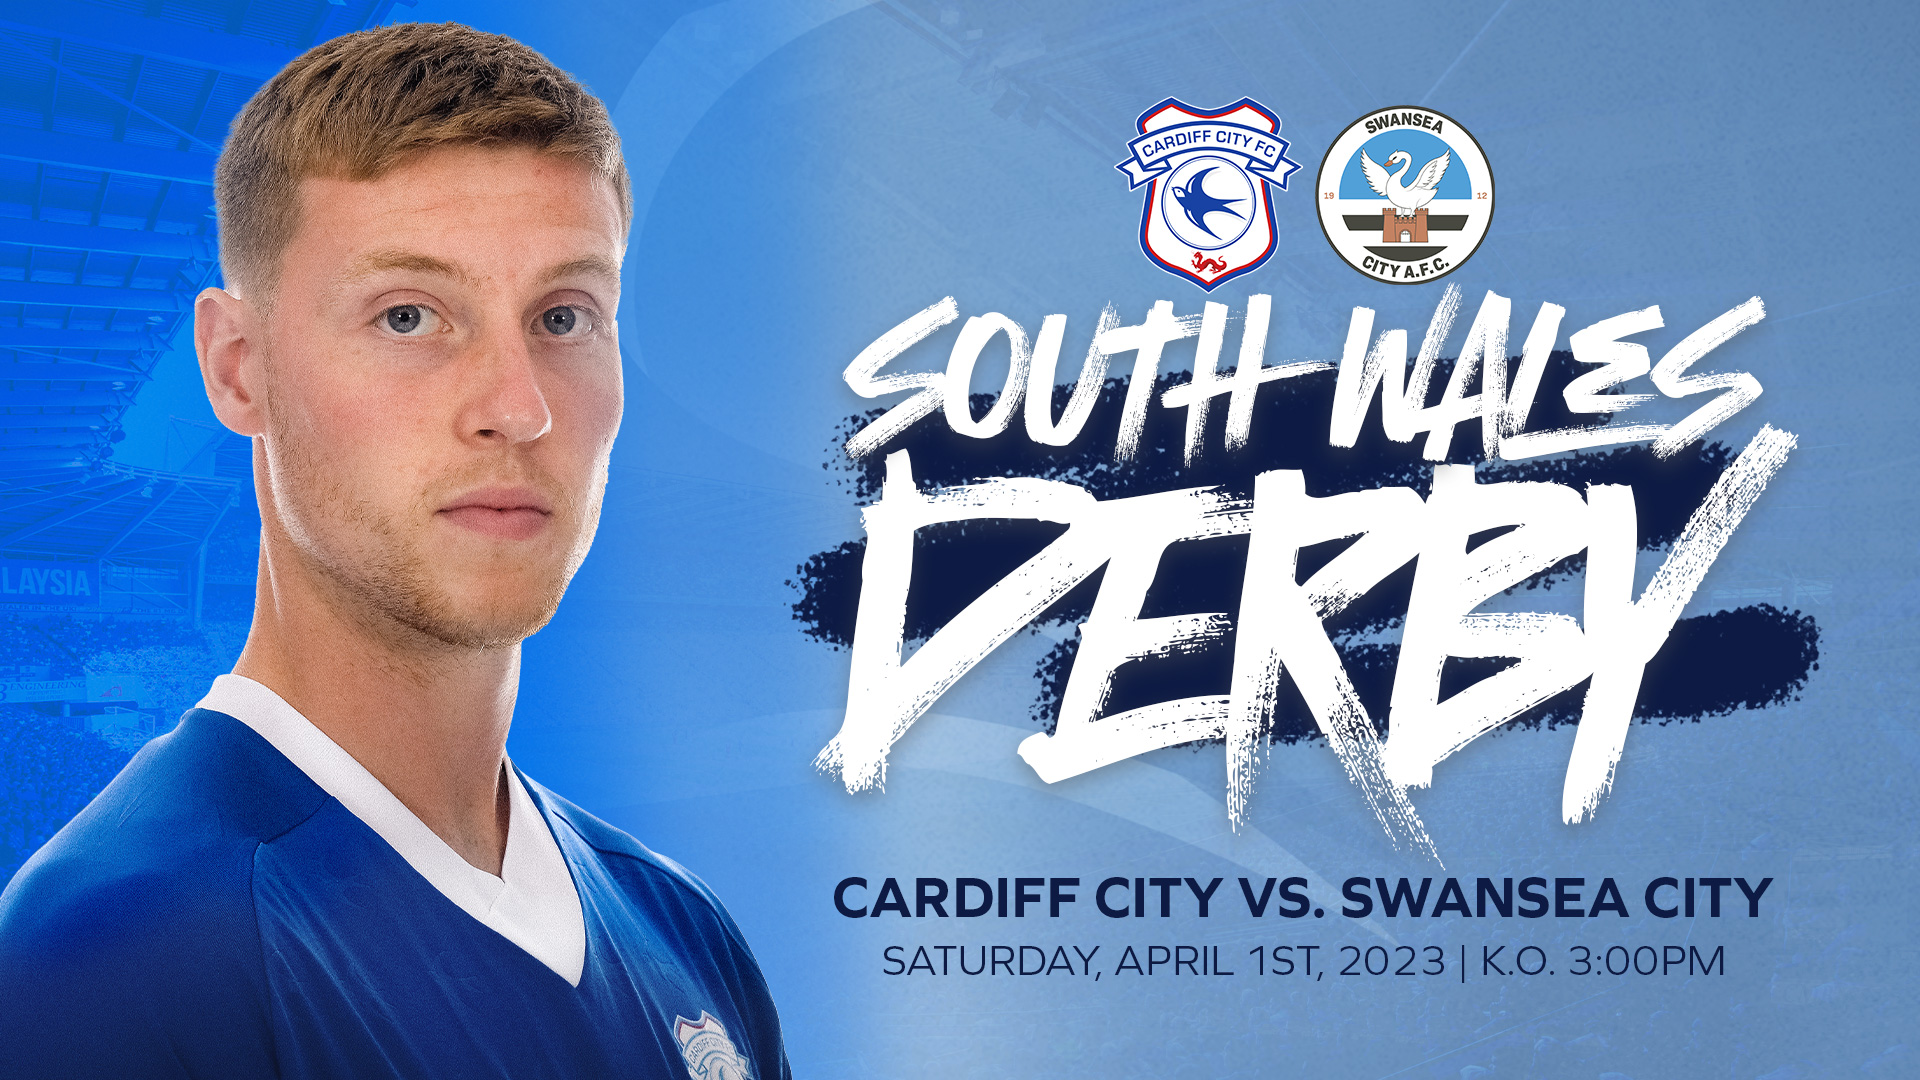 Cameron Antwi scores for Cardiff u-21 against Ipswich Town - Footballghana